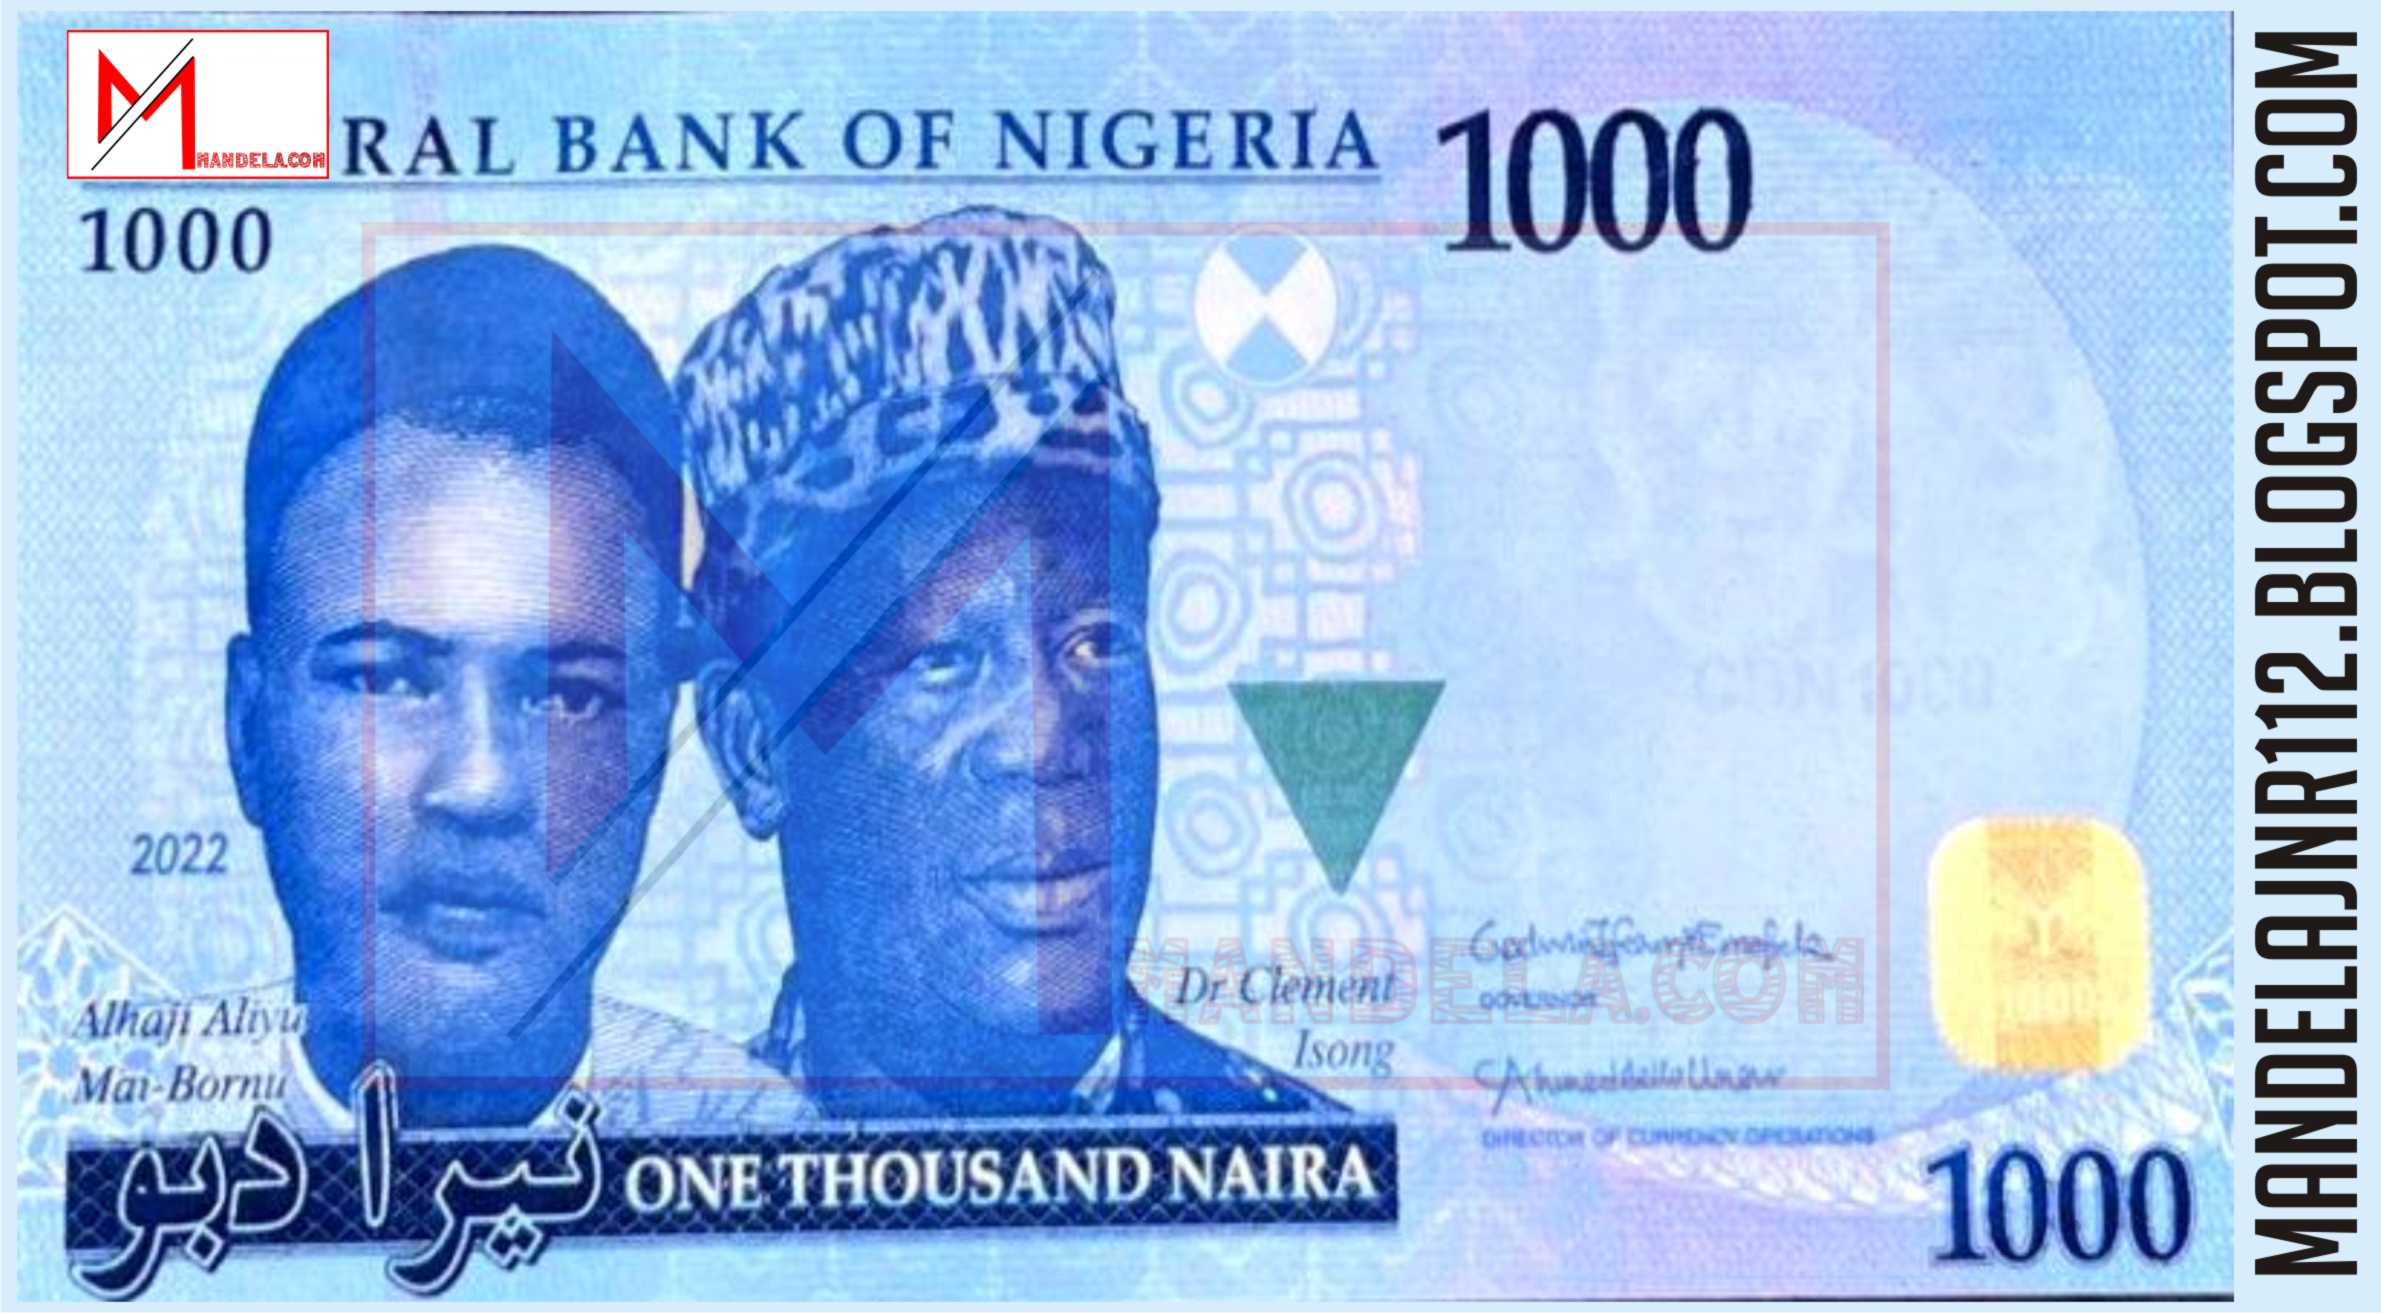 How to Identify Fake 1000 Naira Note